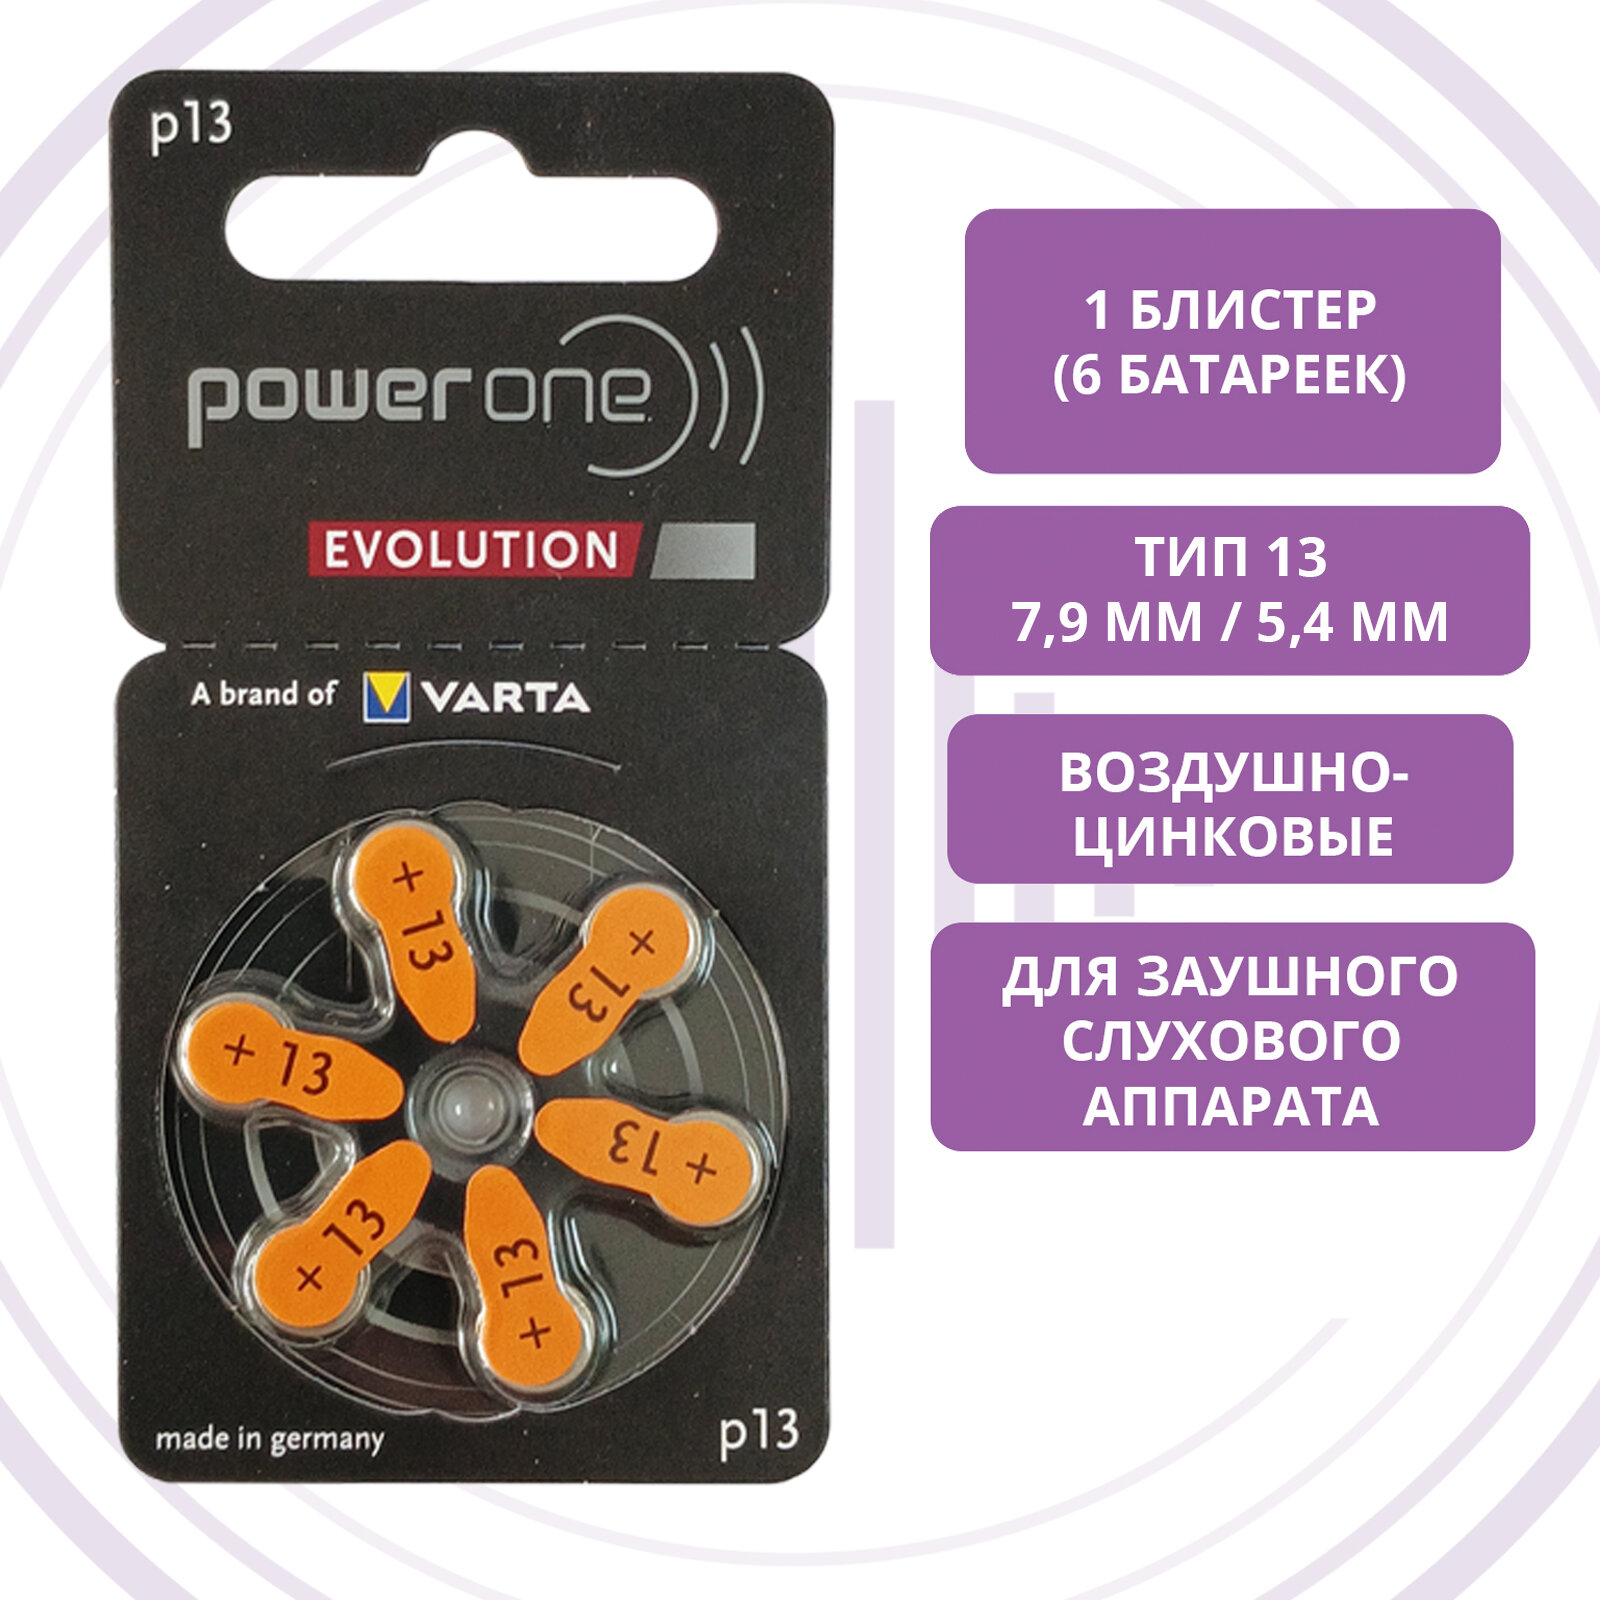 Батарейки PowerOne Evolution p13 (PR48) для слухового аппарата 1 блистер (6 батареек)